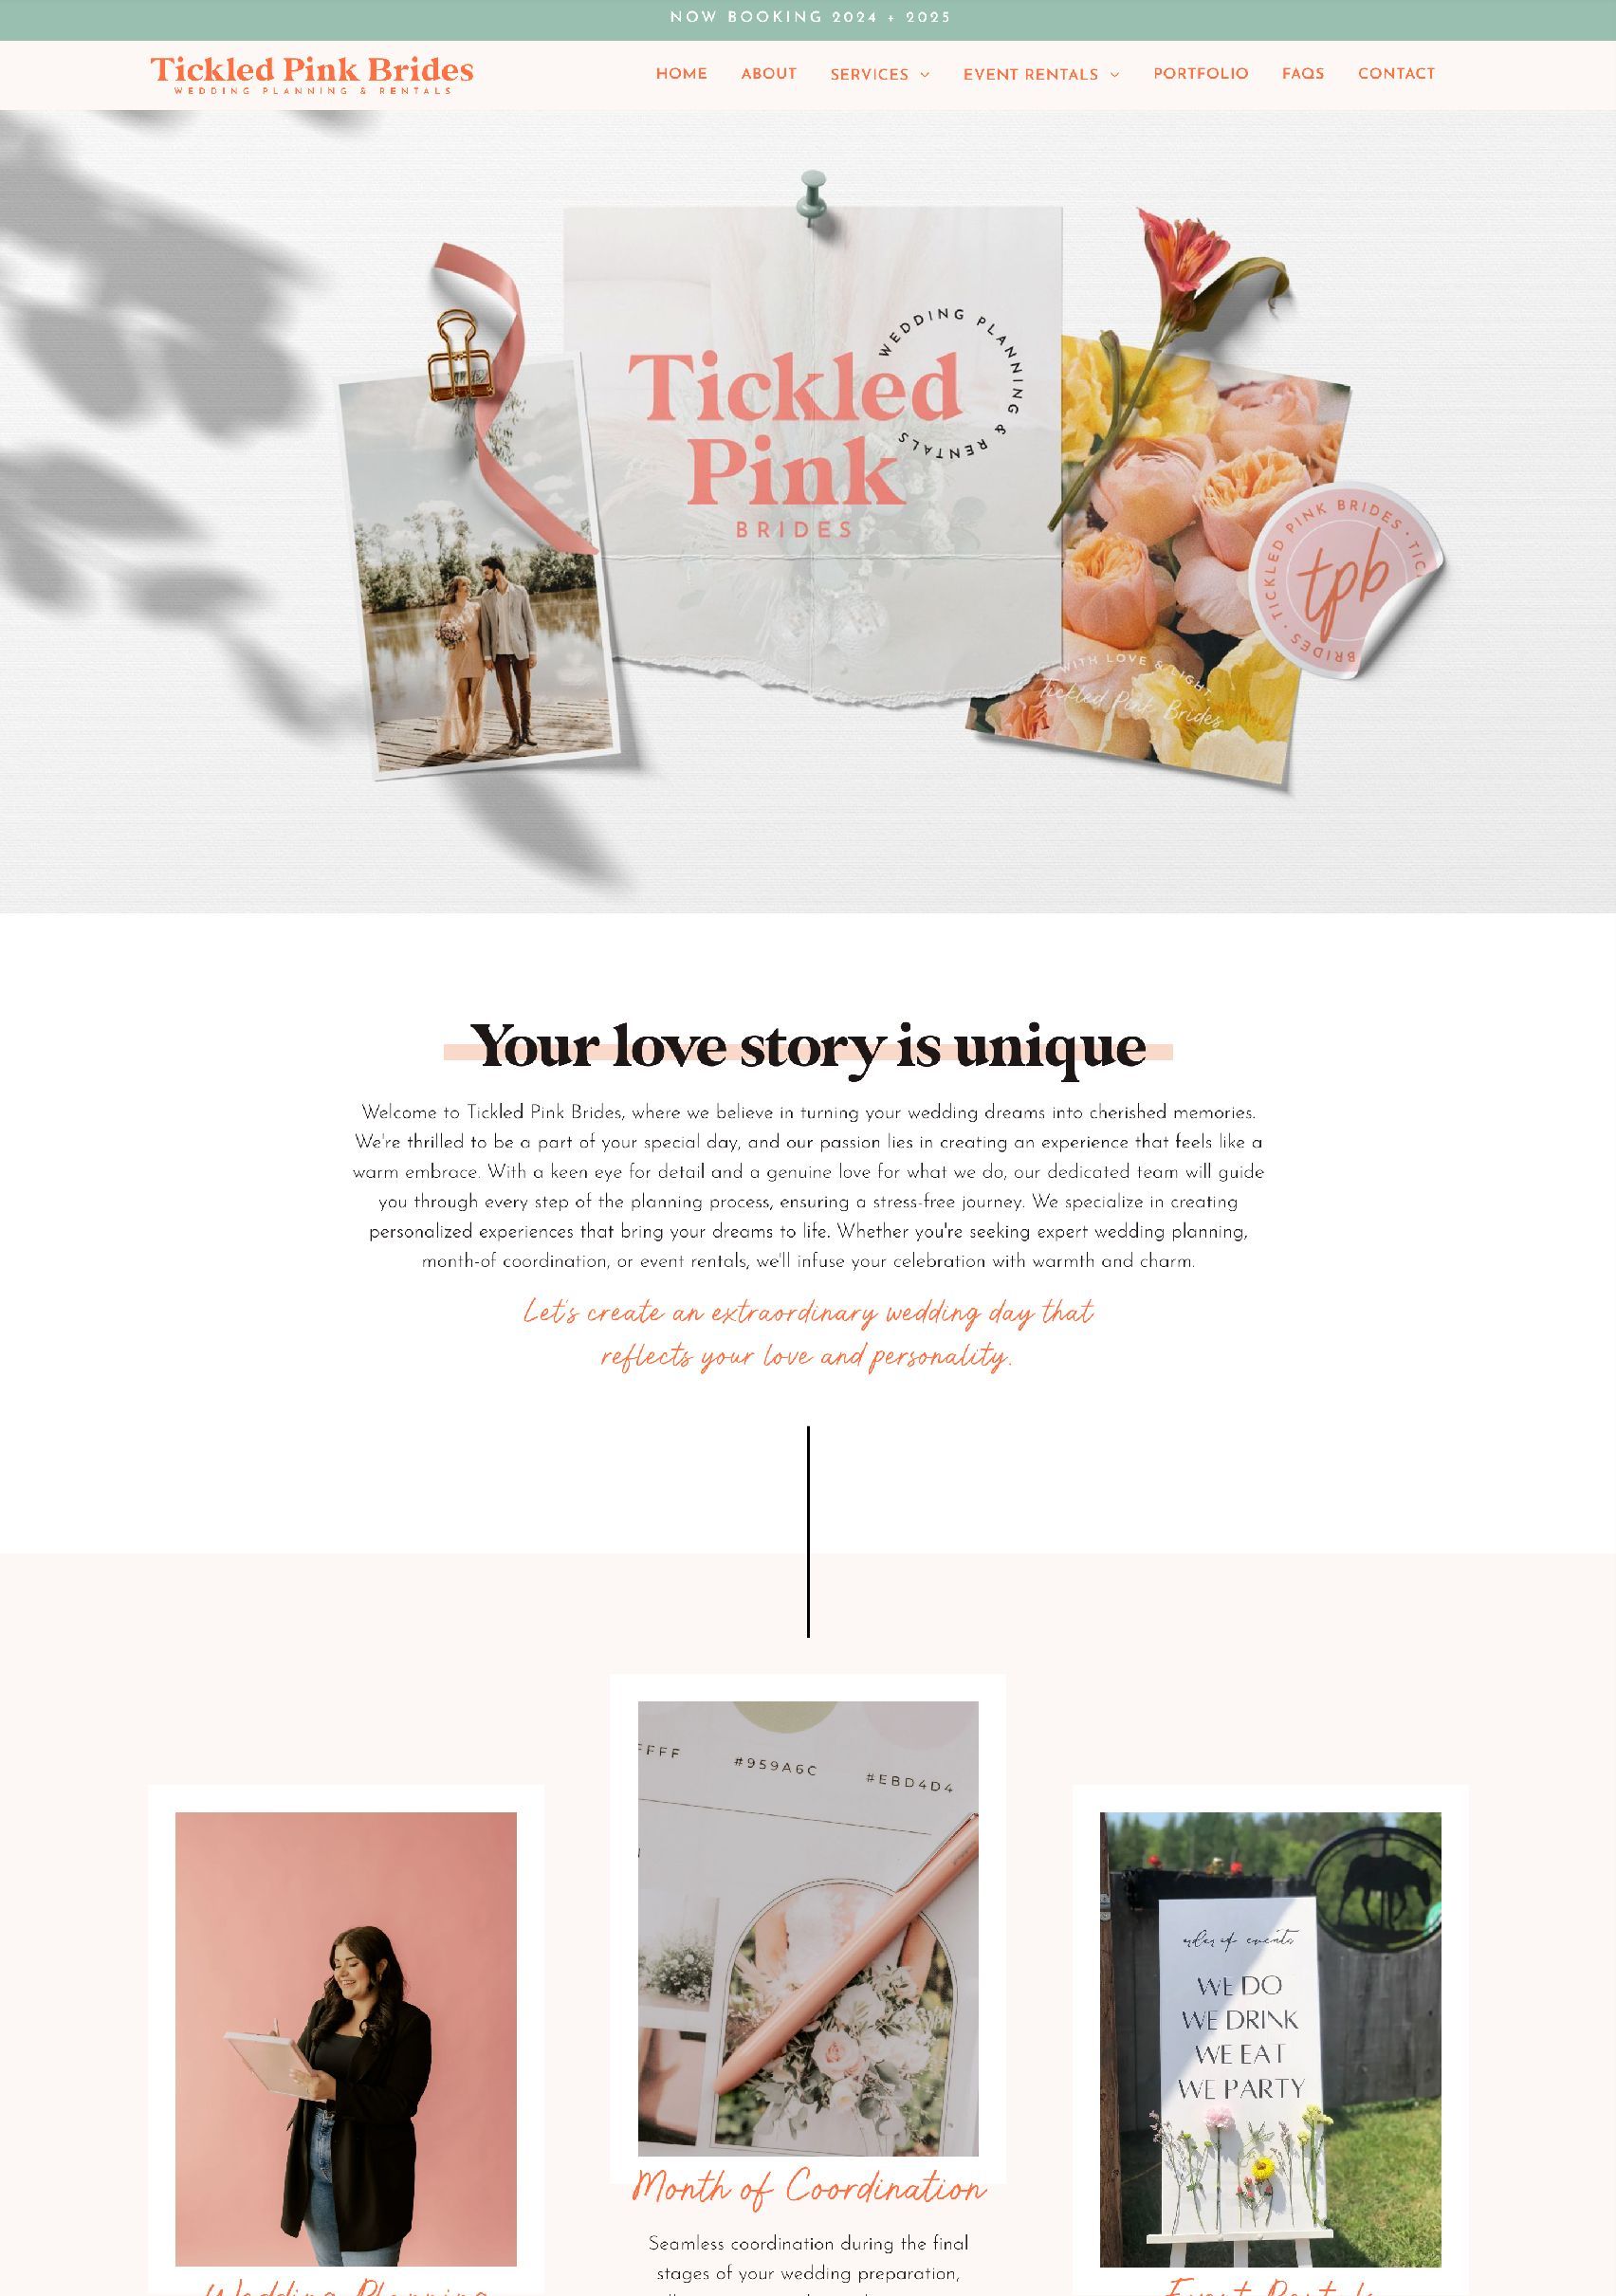 Custom website for Tickled Pink Brides, wedding planning and event rentals